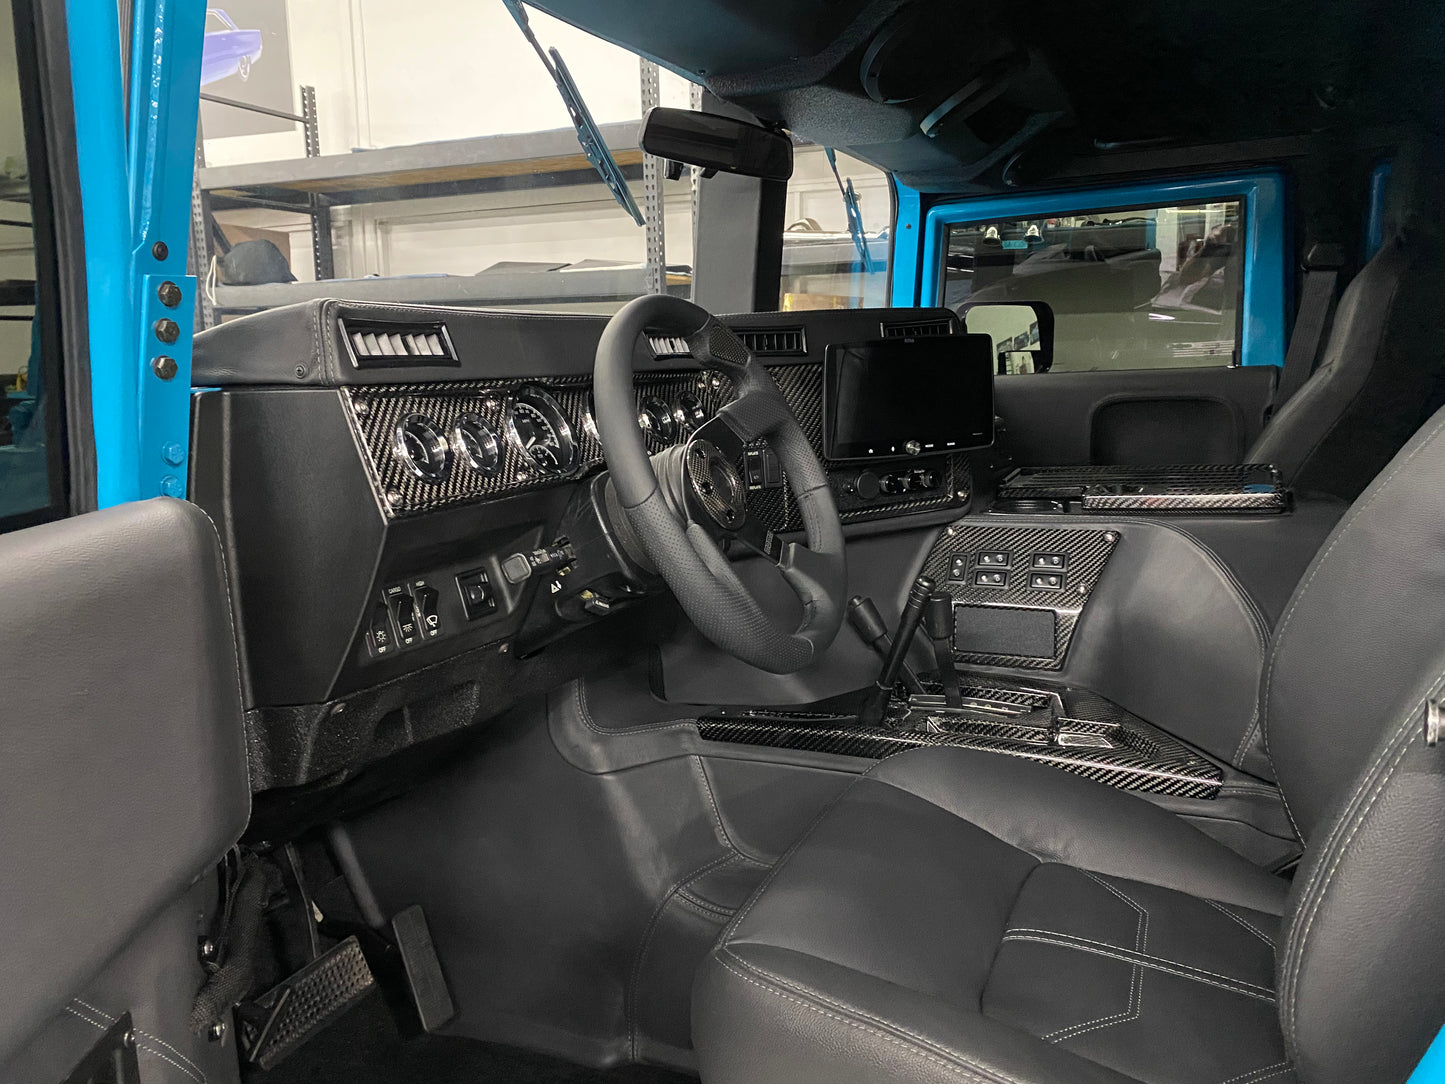 Hummer H1 Alpha Dash Interior Conversion Kit - Fits all H1 & Humvee Models